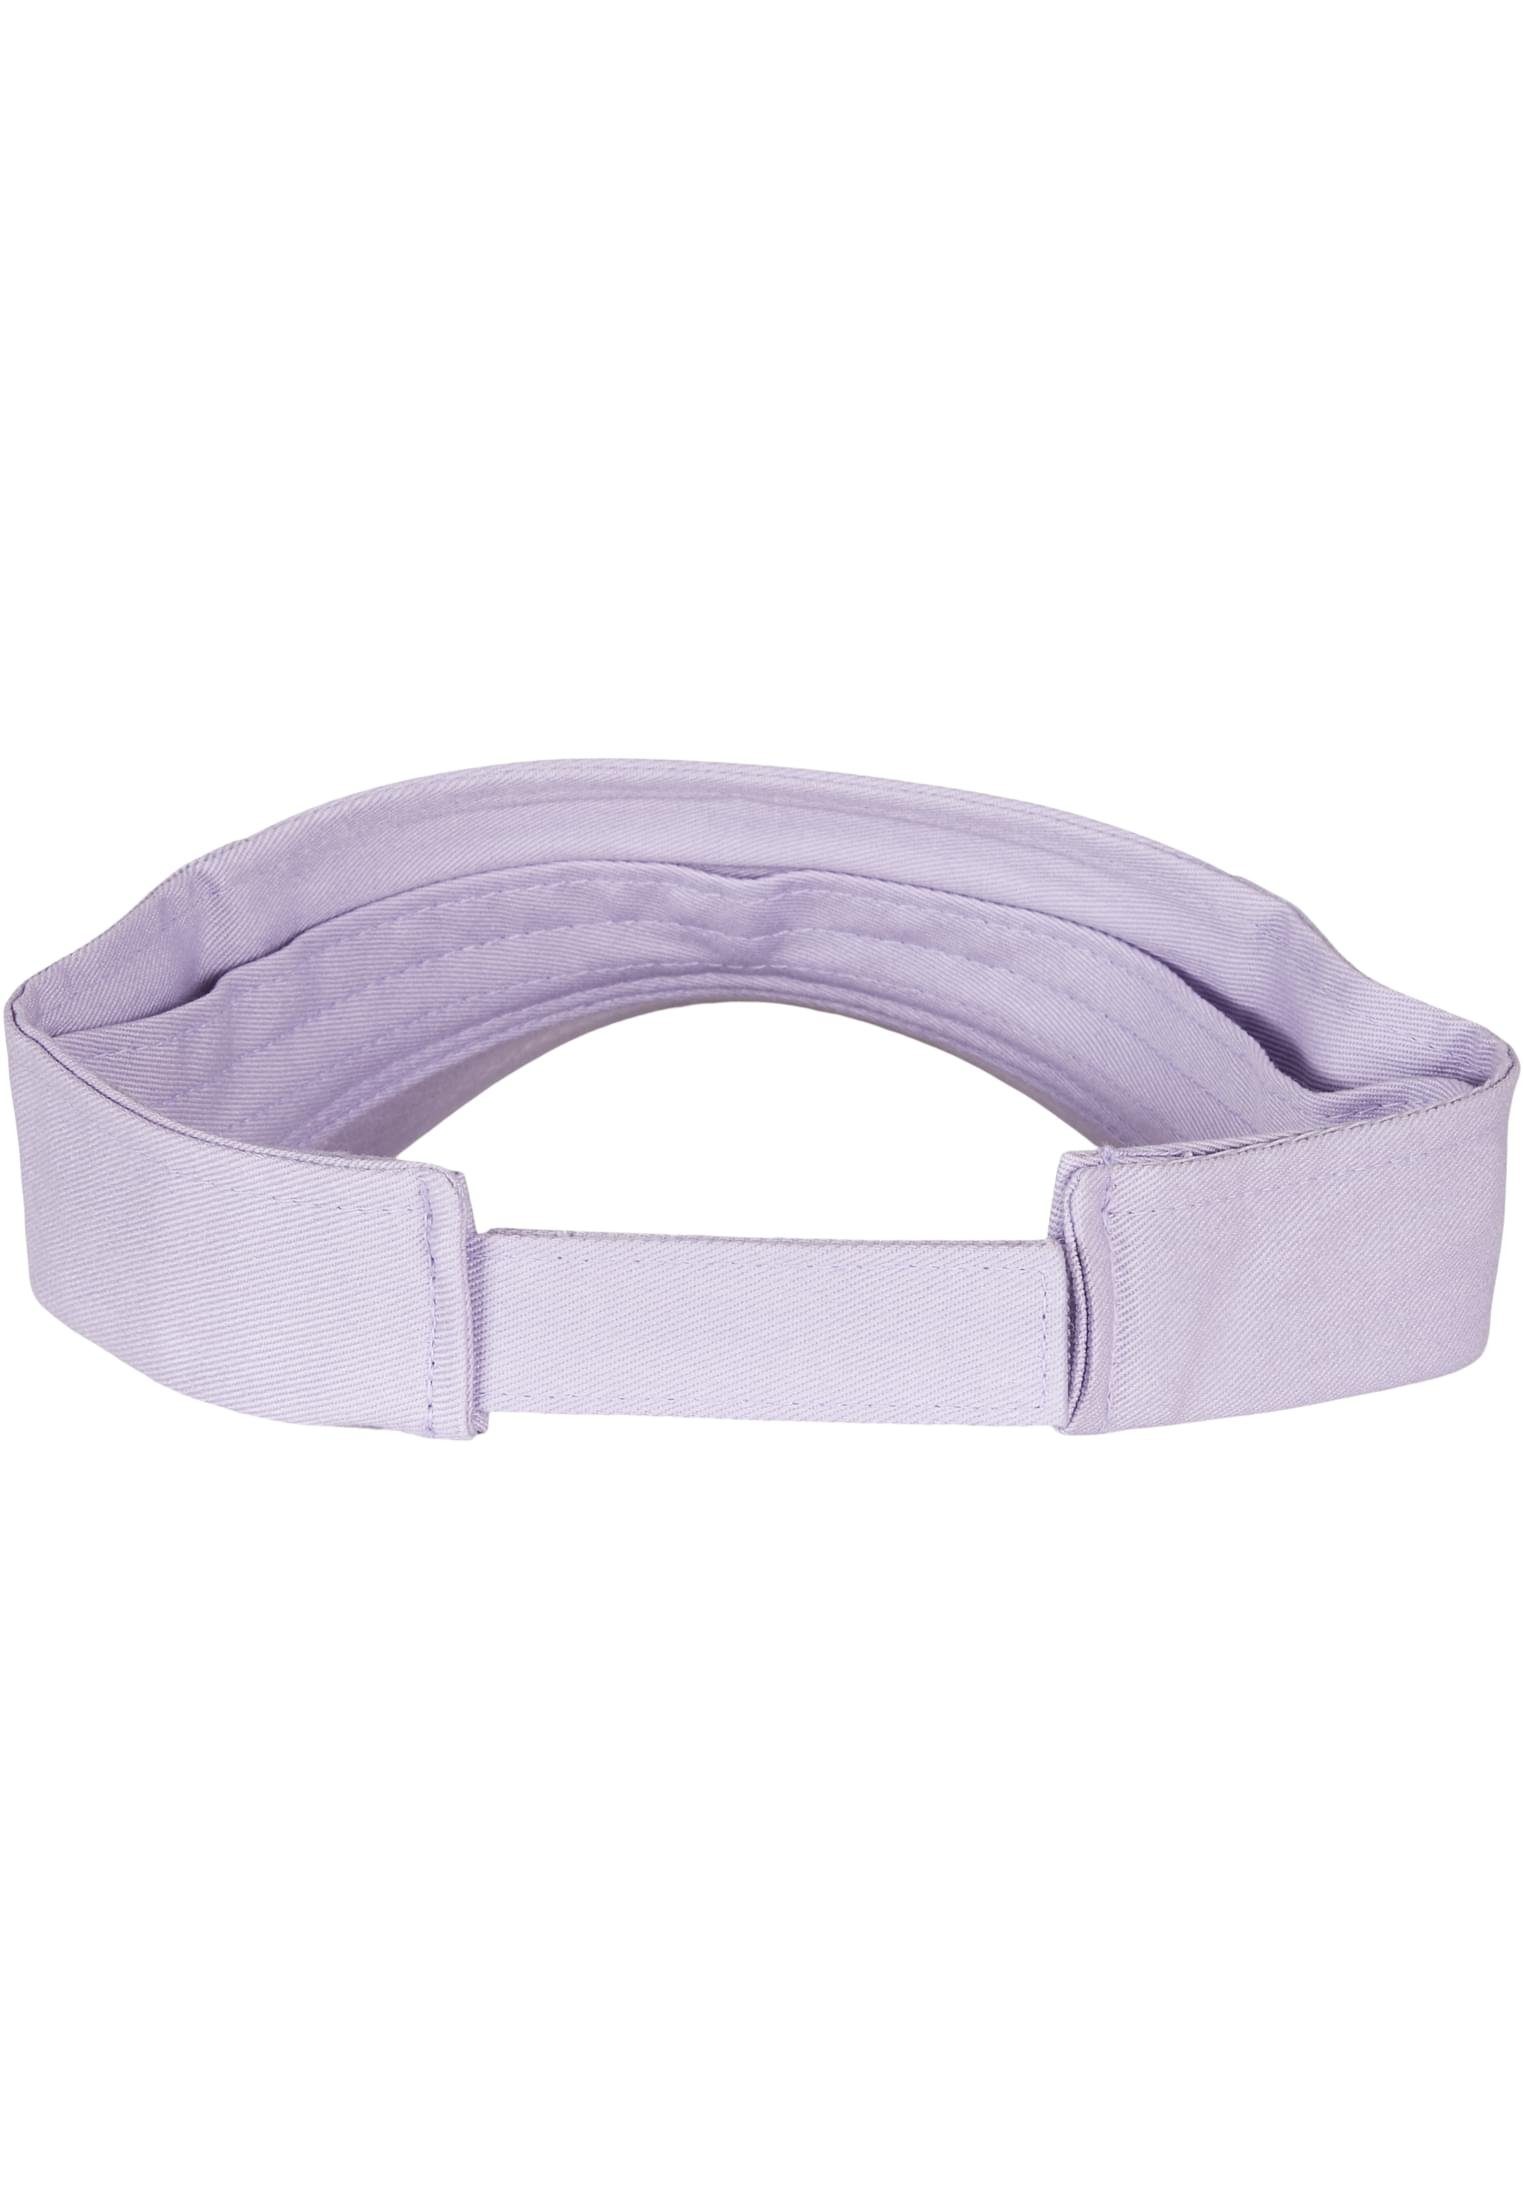 Flexfit Flex Cap Accessoires Curved Cap Visor lilac